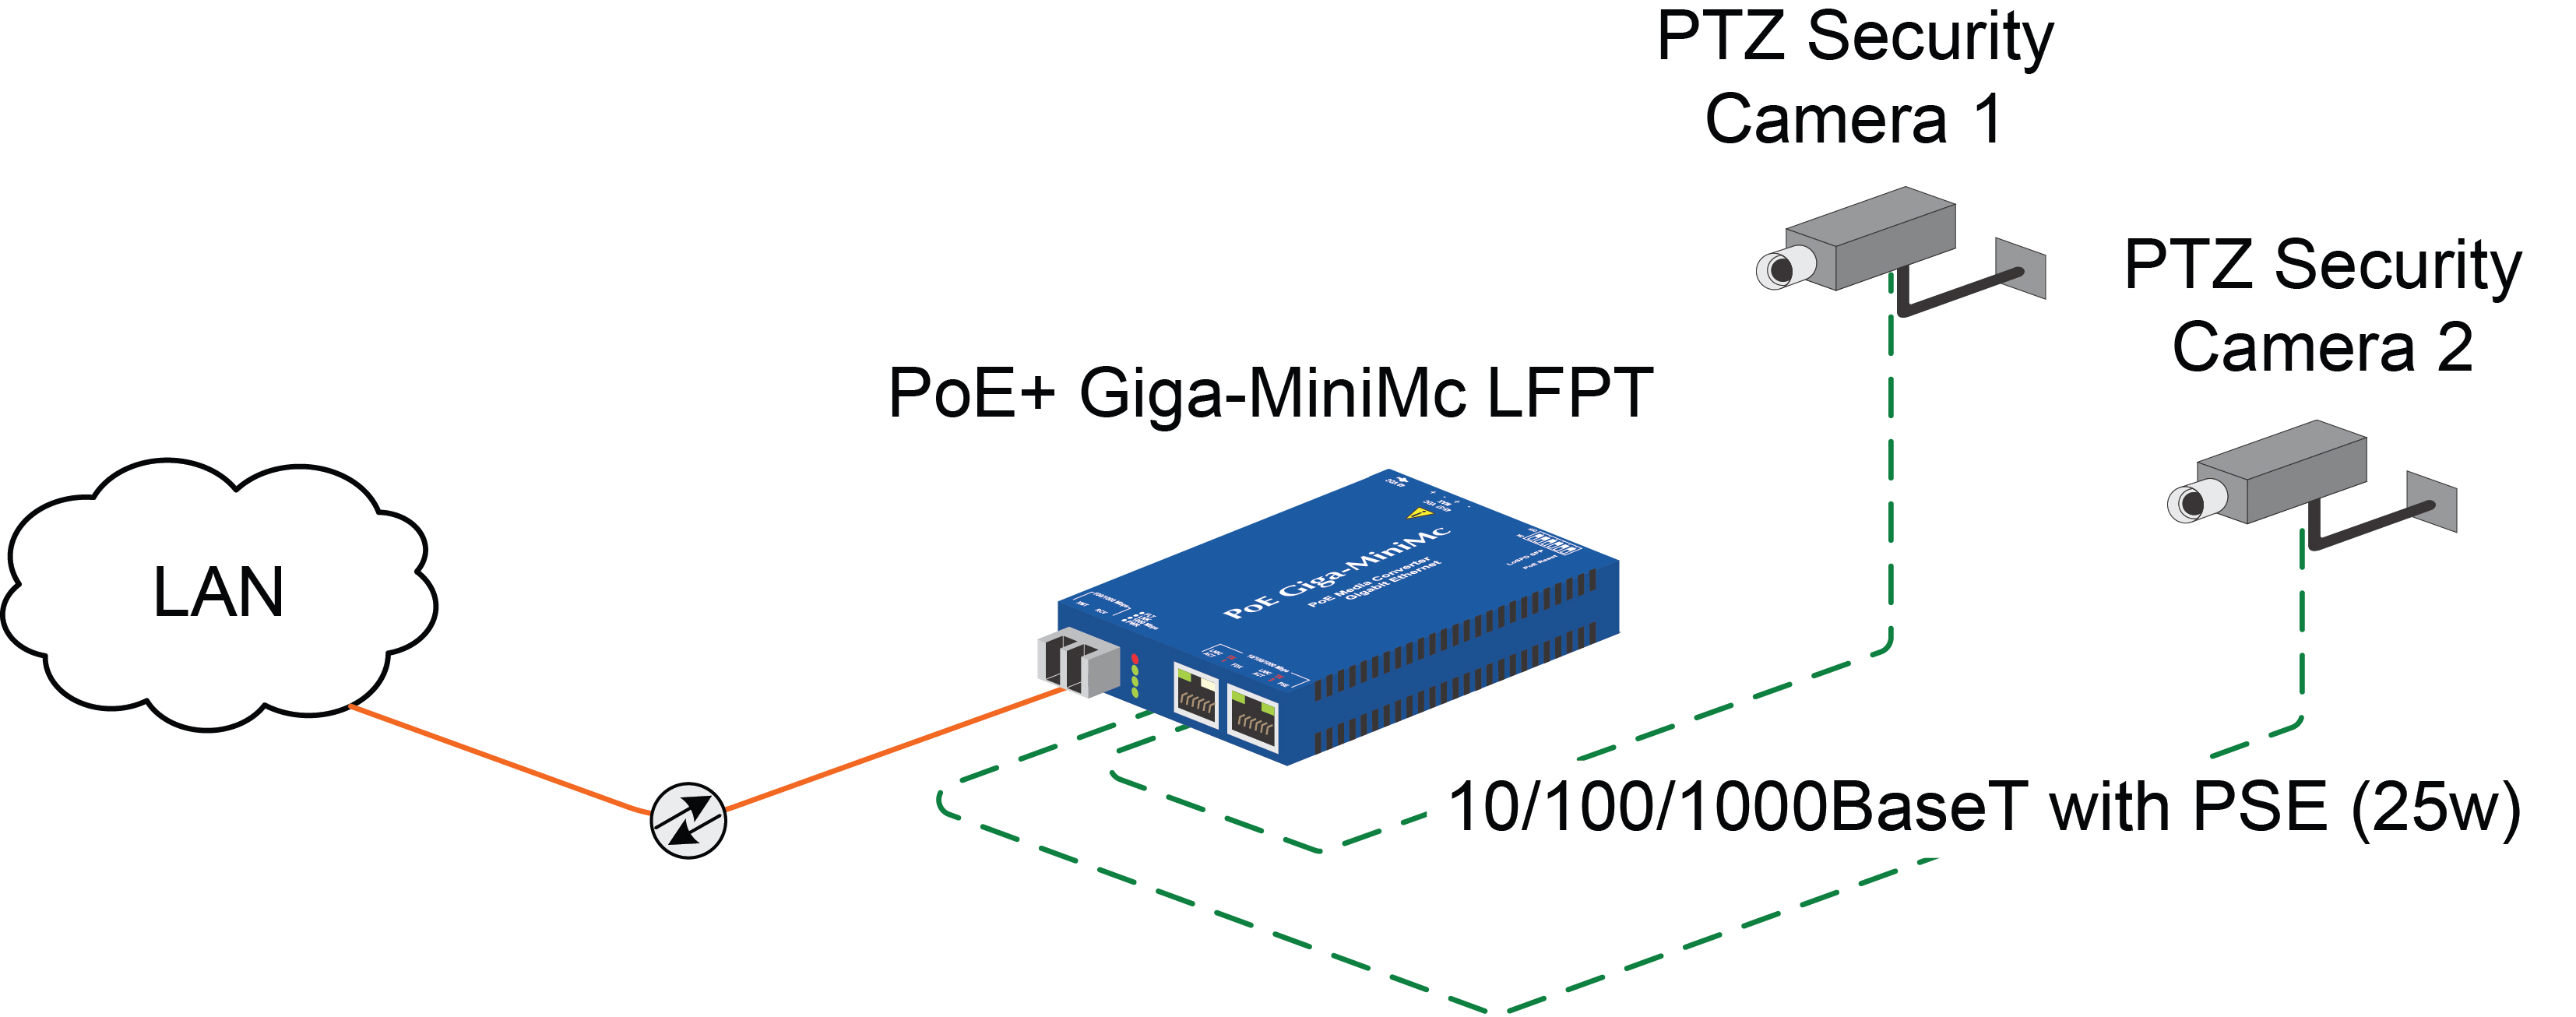 Figure 1 - A typical installation using the PoE+ Giga-MiniMc media converter